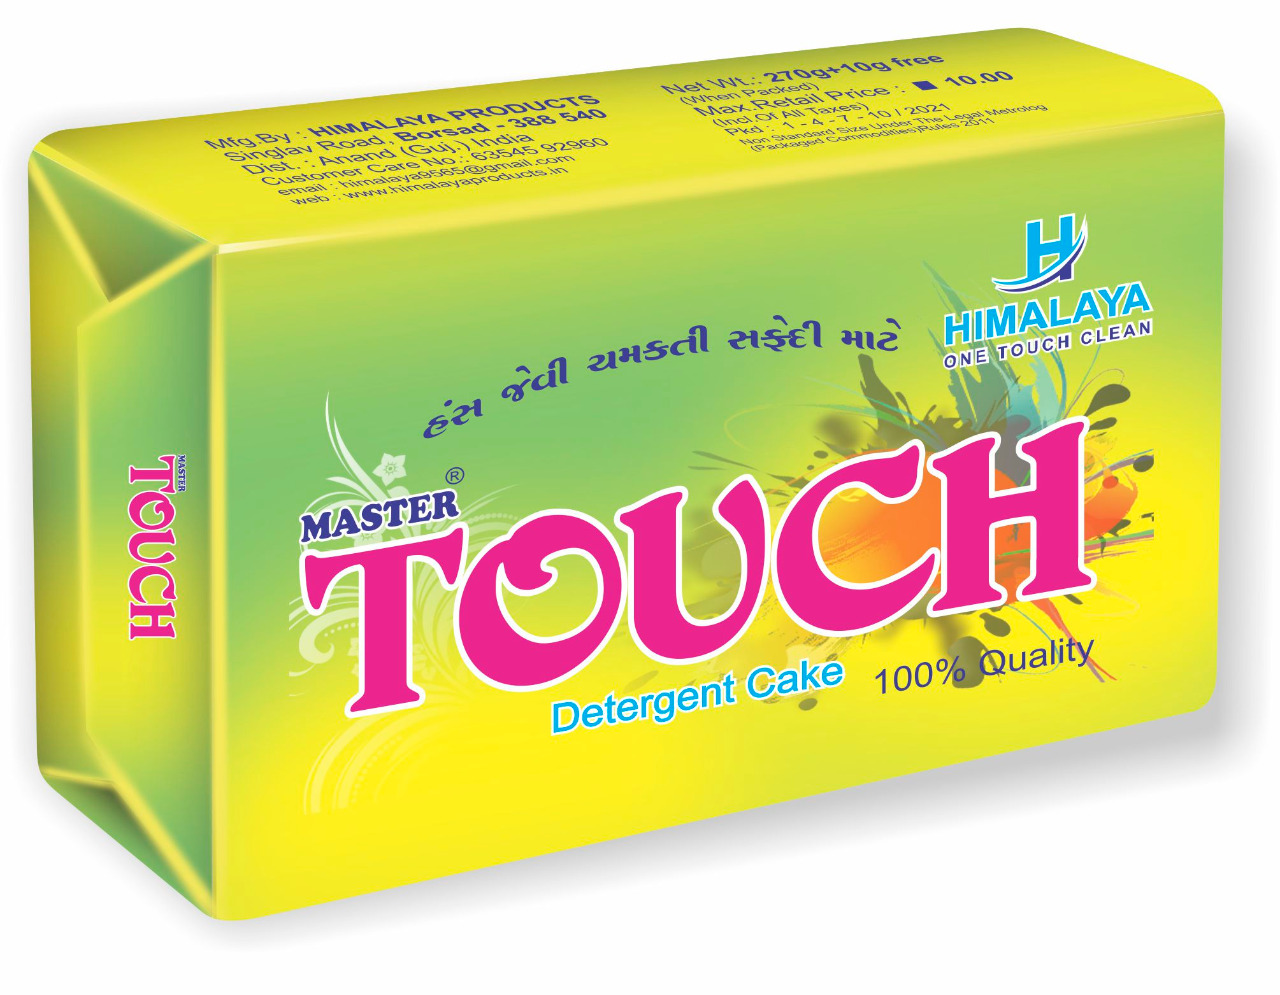 Master Touch White Detergent Cake